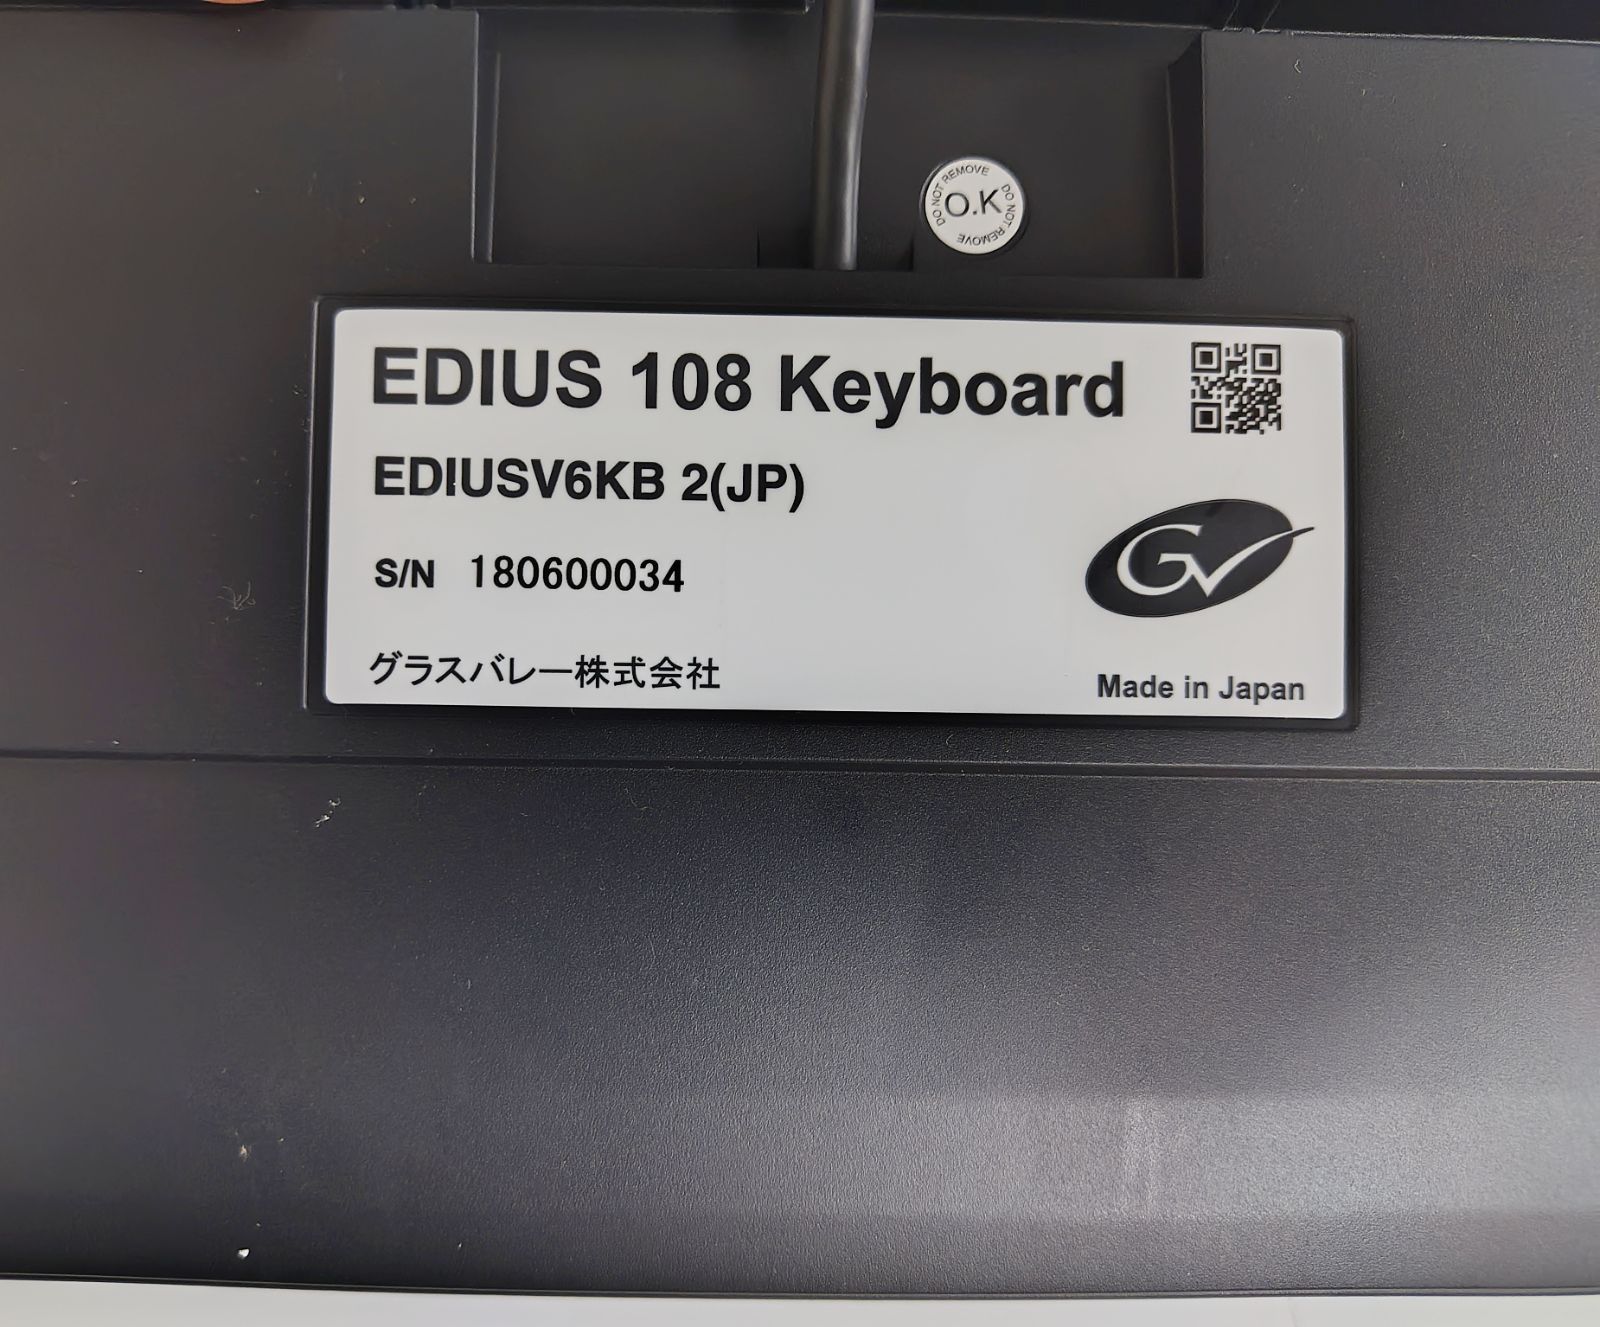 Grass Valley EDIUS 108 Keyboard USBキーボード EDIUSV6KB 2(JP